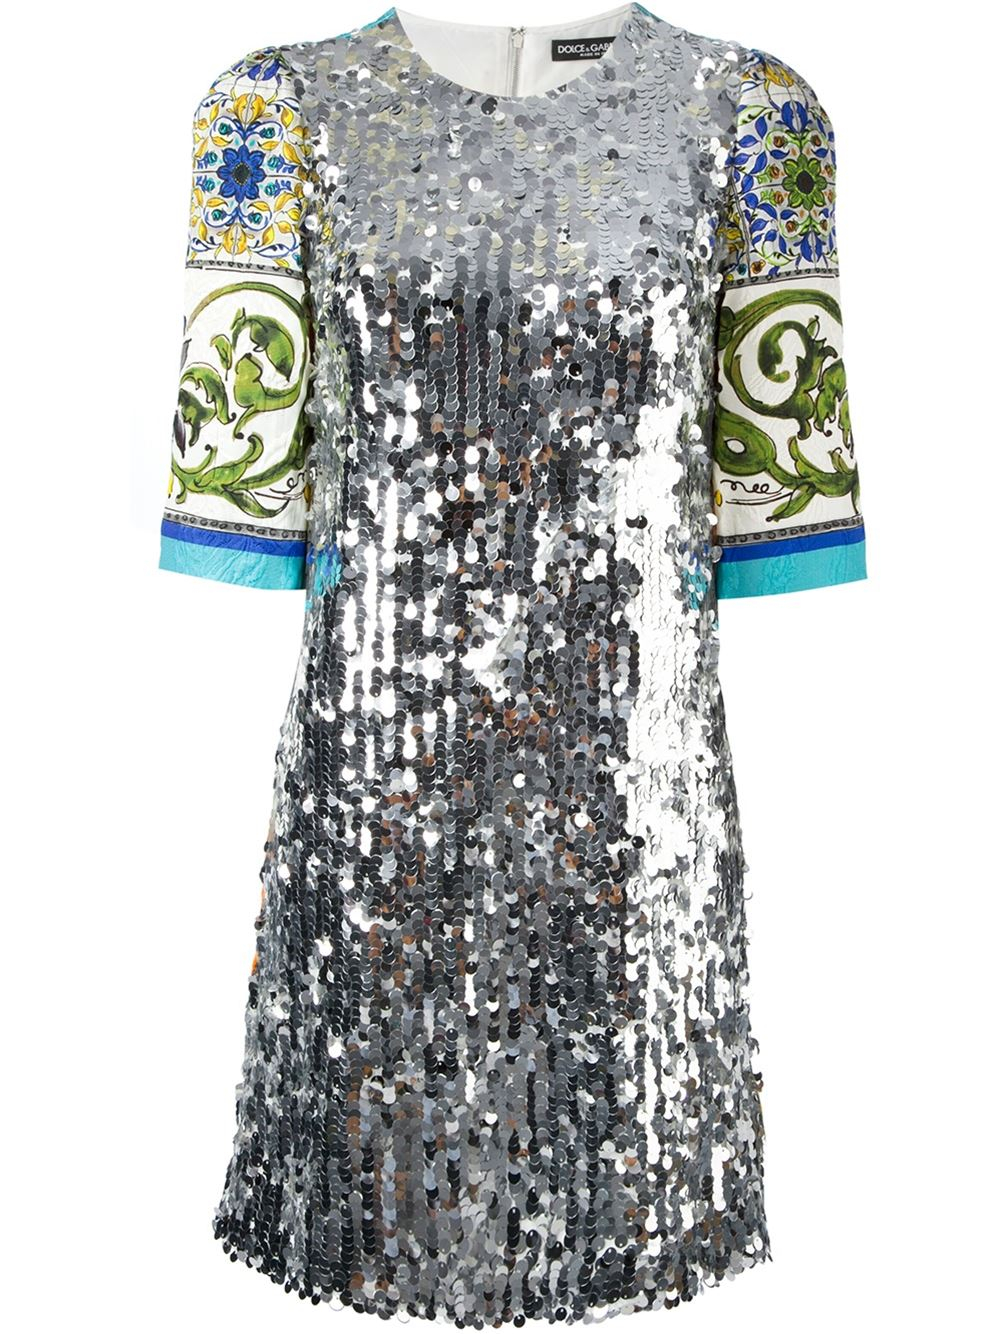 Lyst - Dolce & gabbana 'Sicilia' Sequined Dress in Metallic